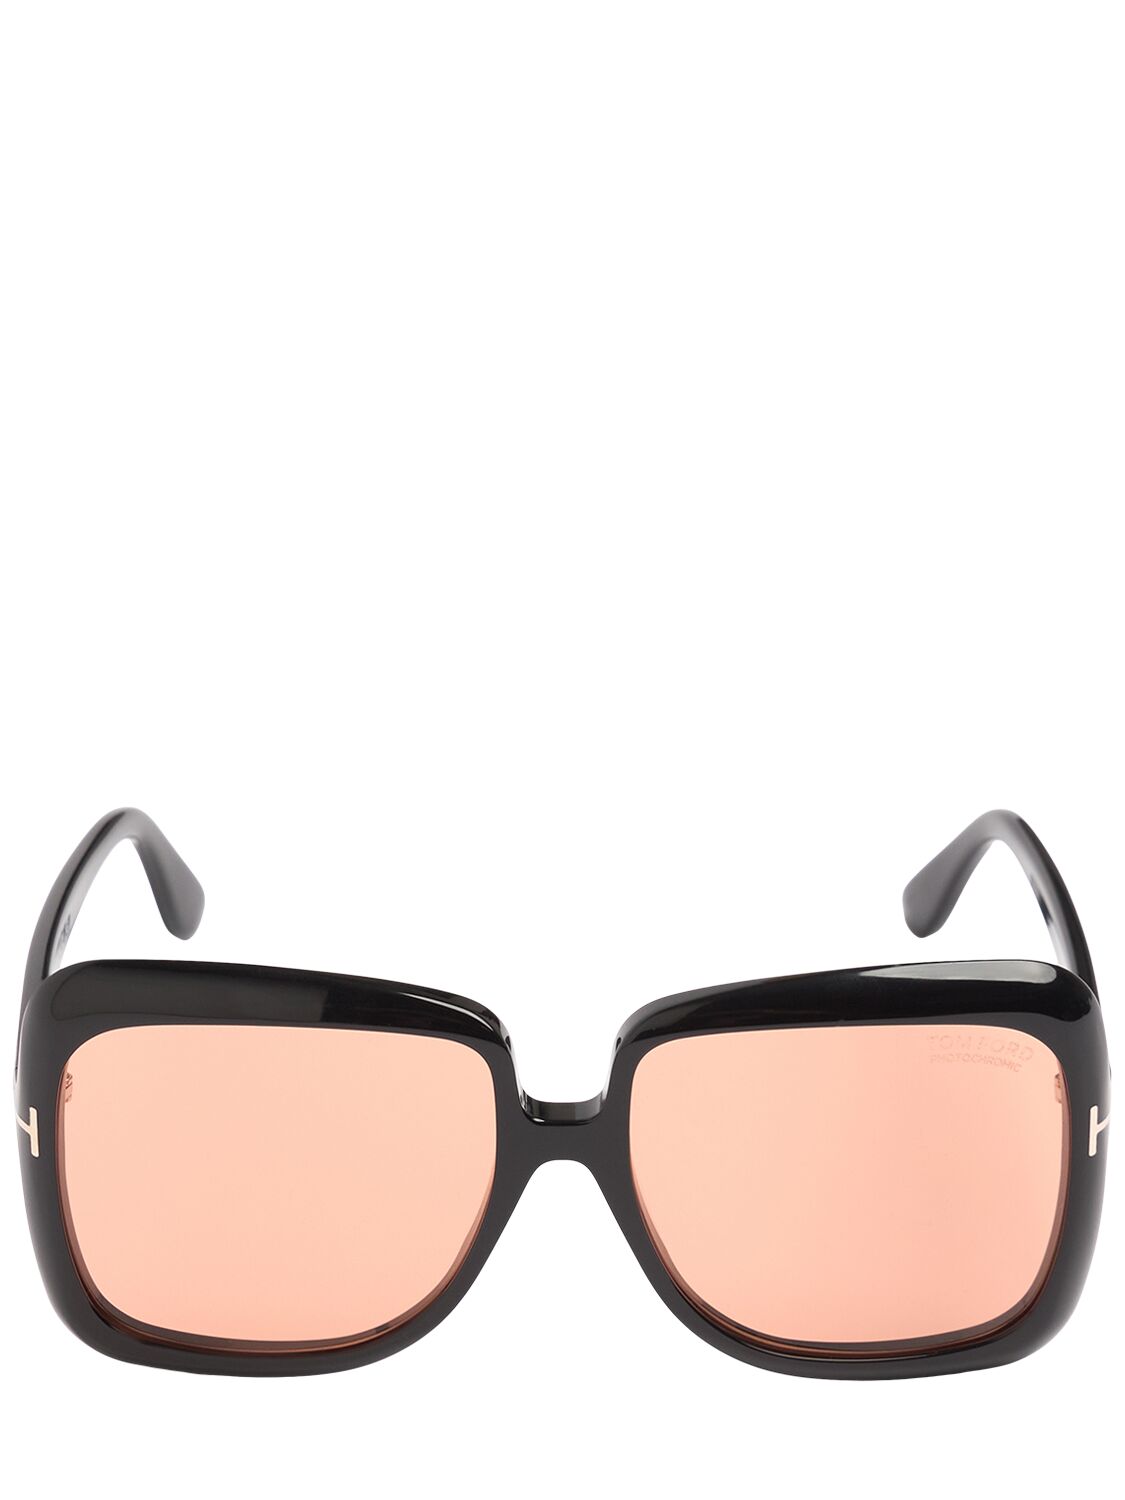 Tom Ford Women's Lorelai D107 59mm Square Sunglasses In Black Terracotta